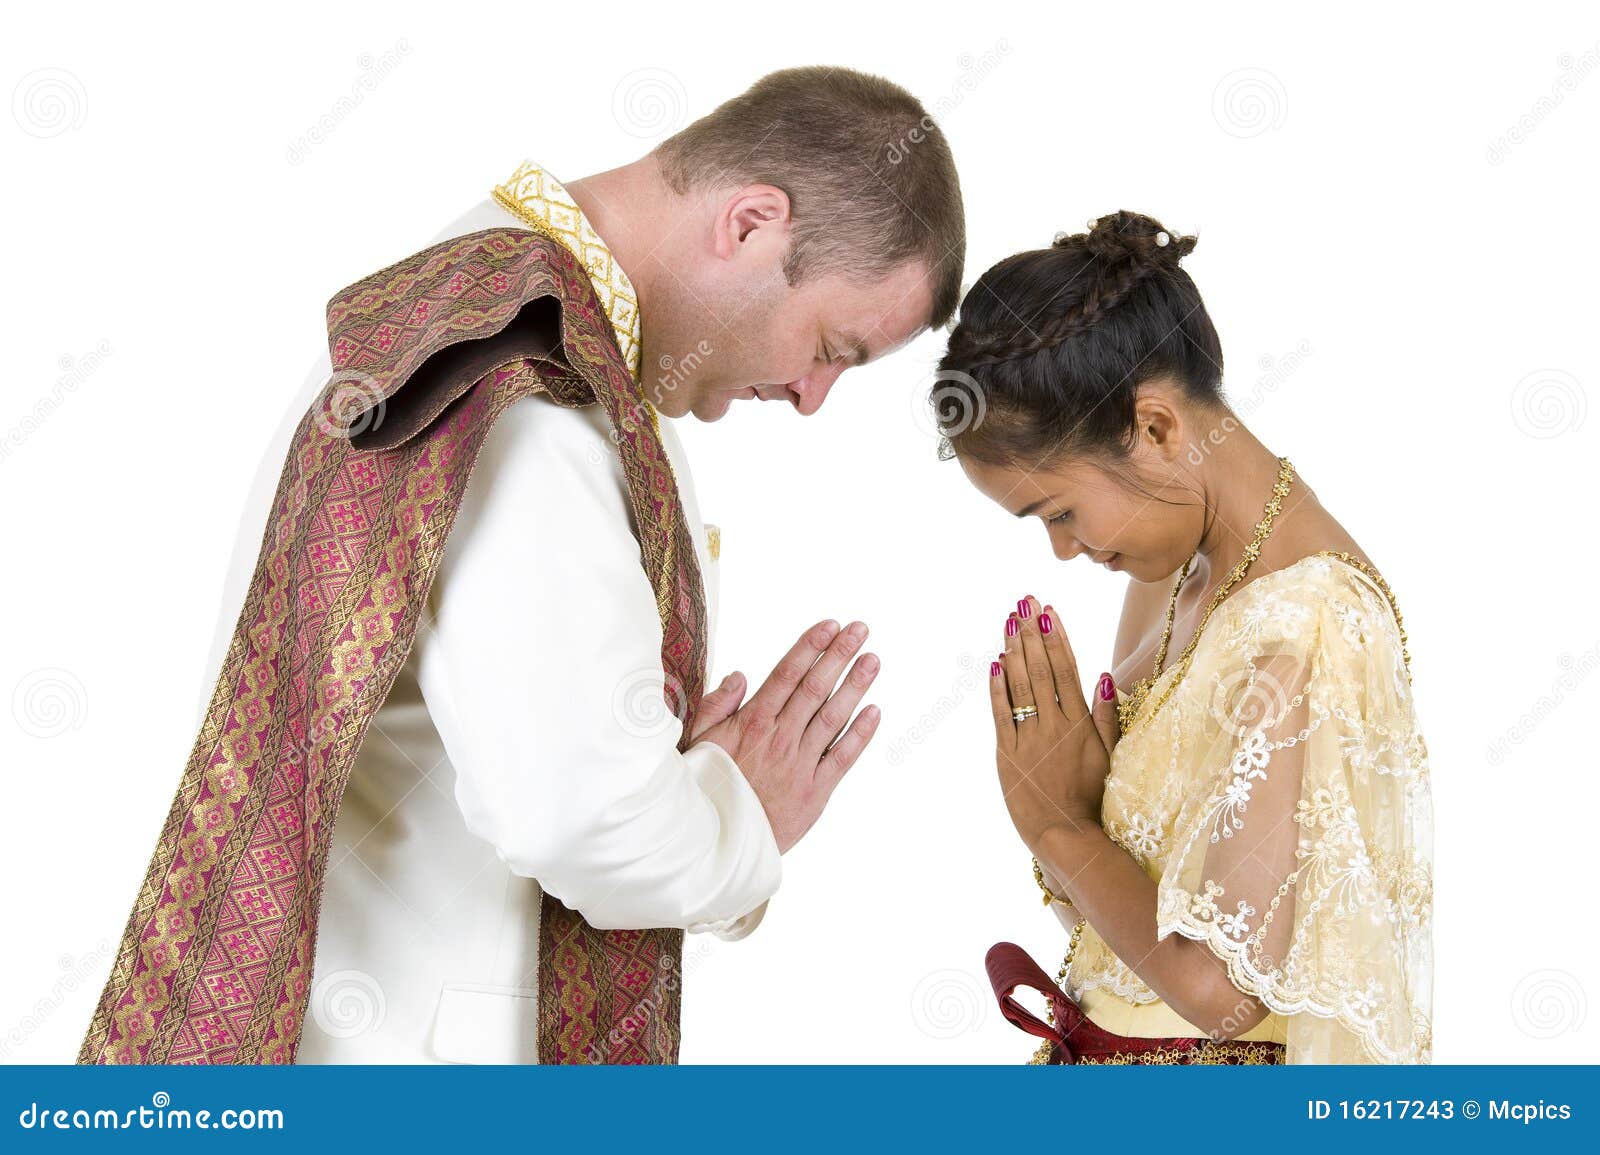 Interracial Dating Thai Brides